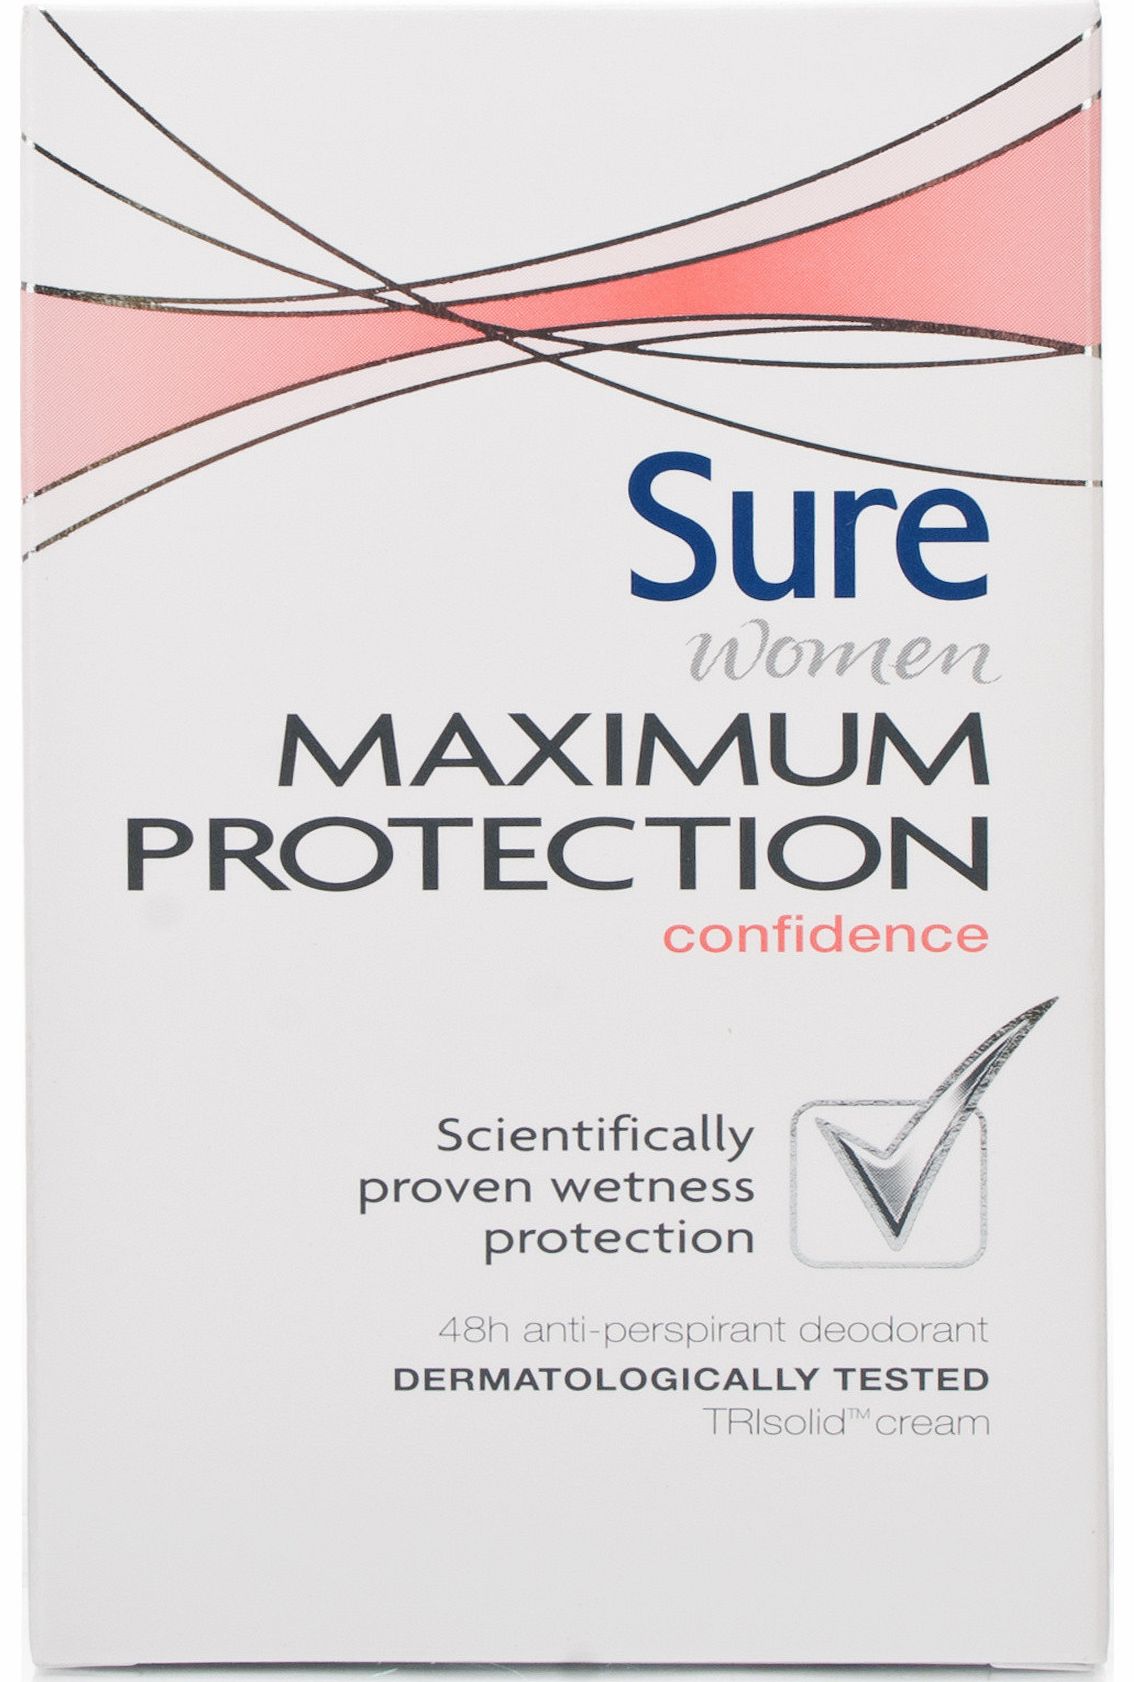 Sure Women Maximum Protection Confidence